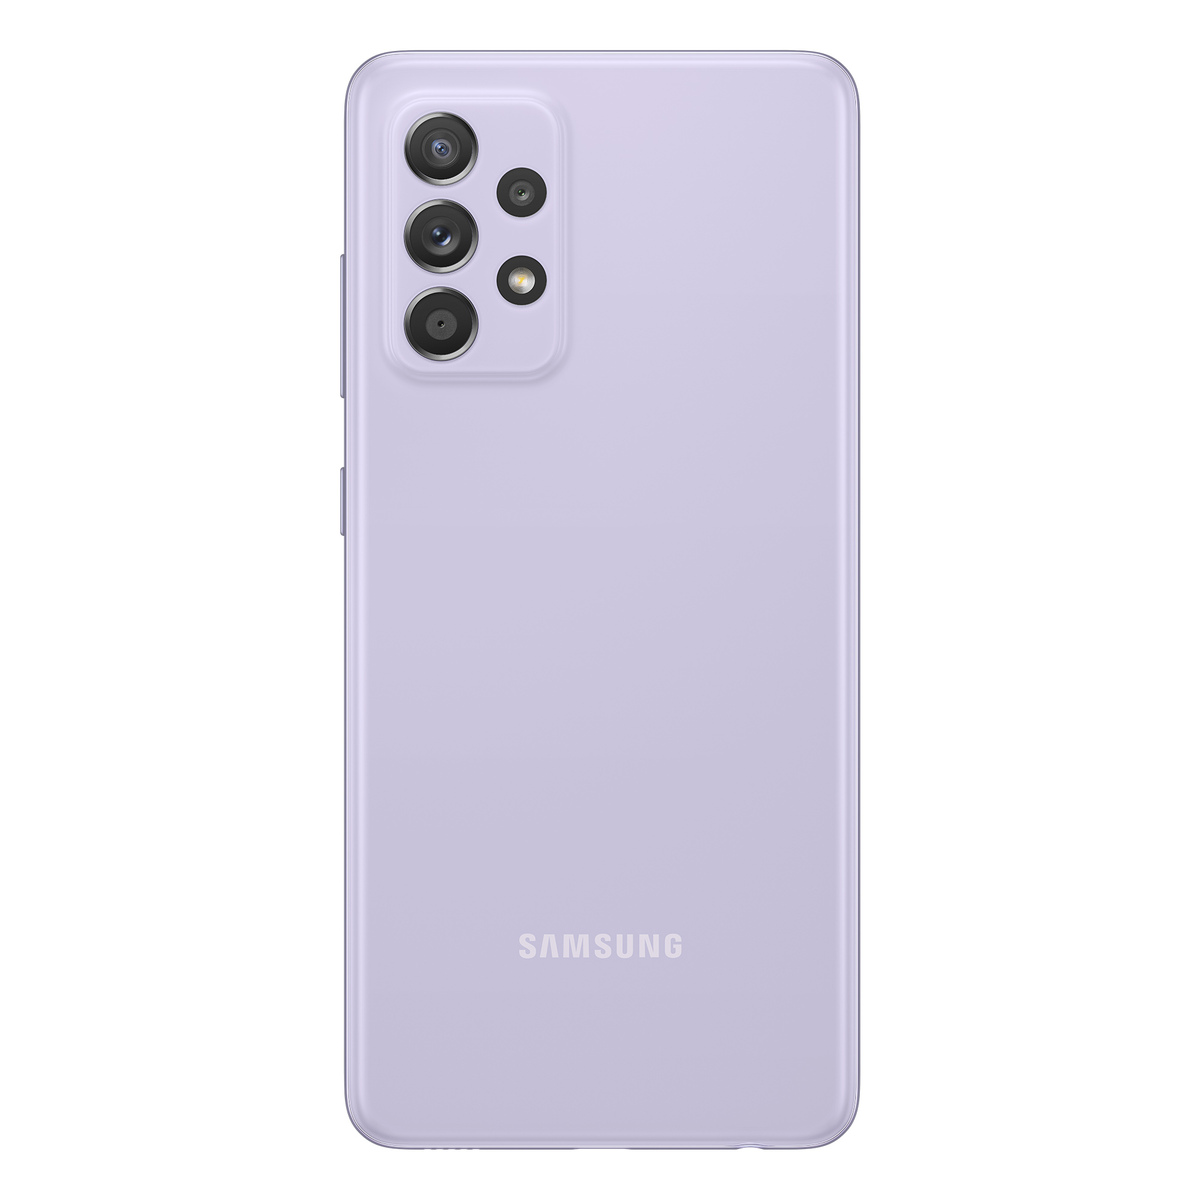 Price ksa in a52 samsung Samsung Galaxy